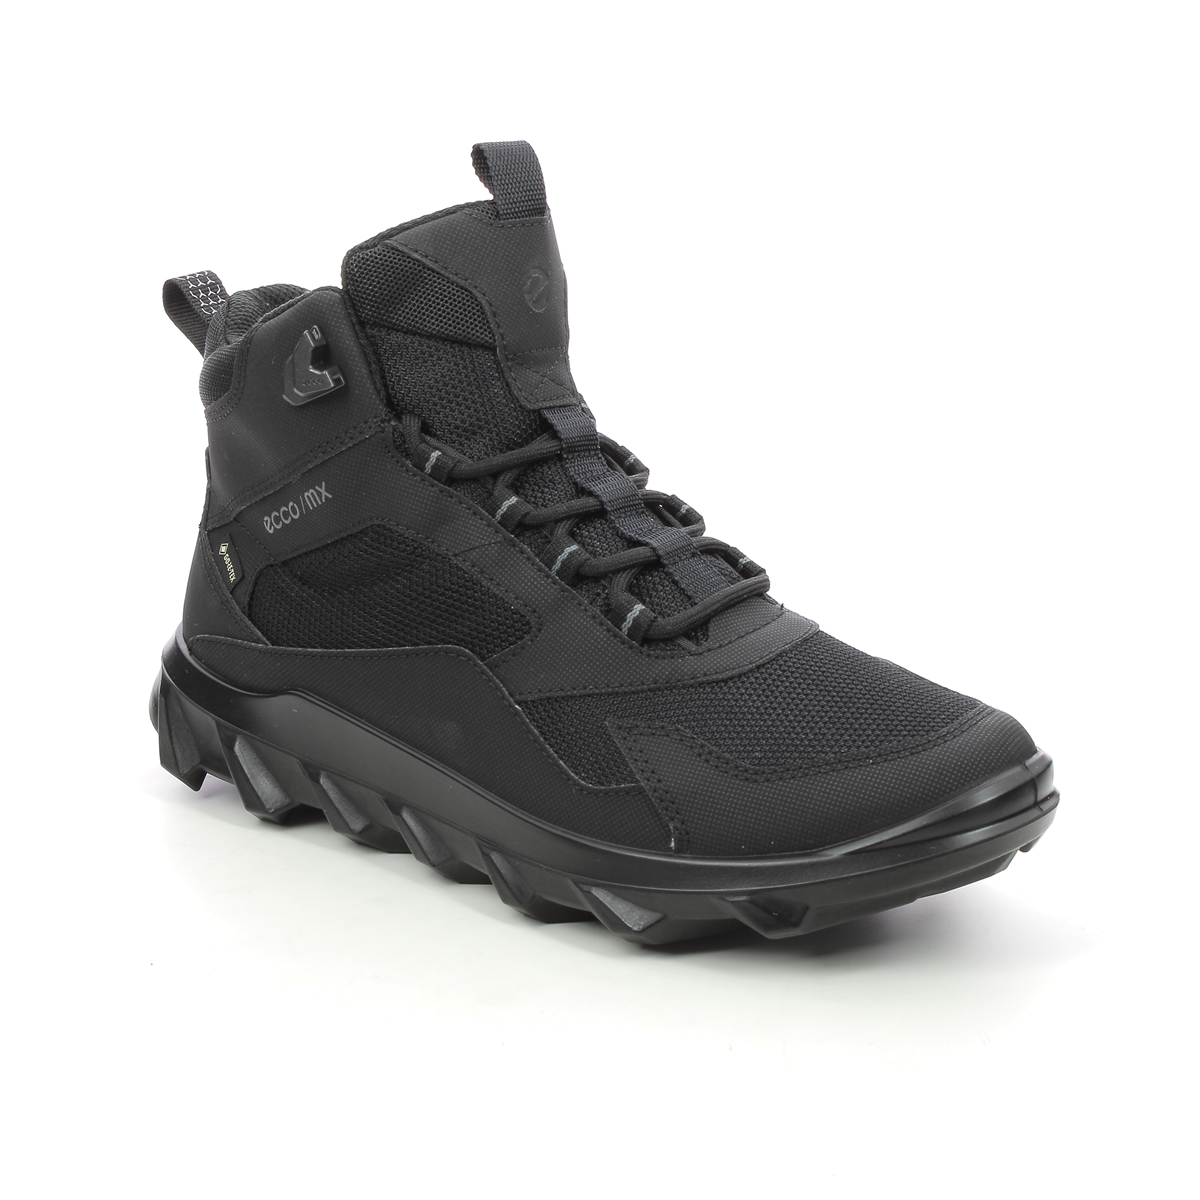 Ecco Mx Boot Gtx W Black Womens Walking Boots 820223-51052 In Size 37 In Plain Black